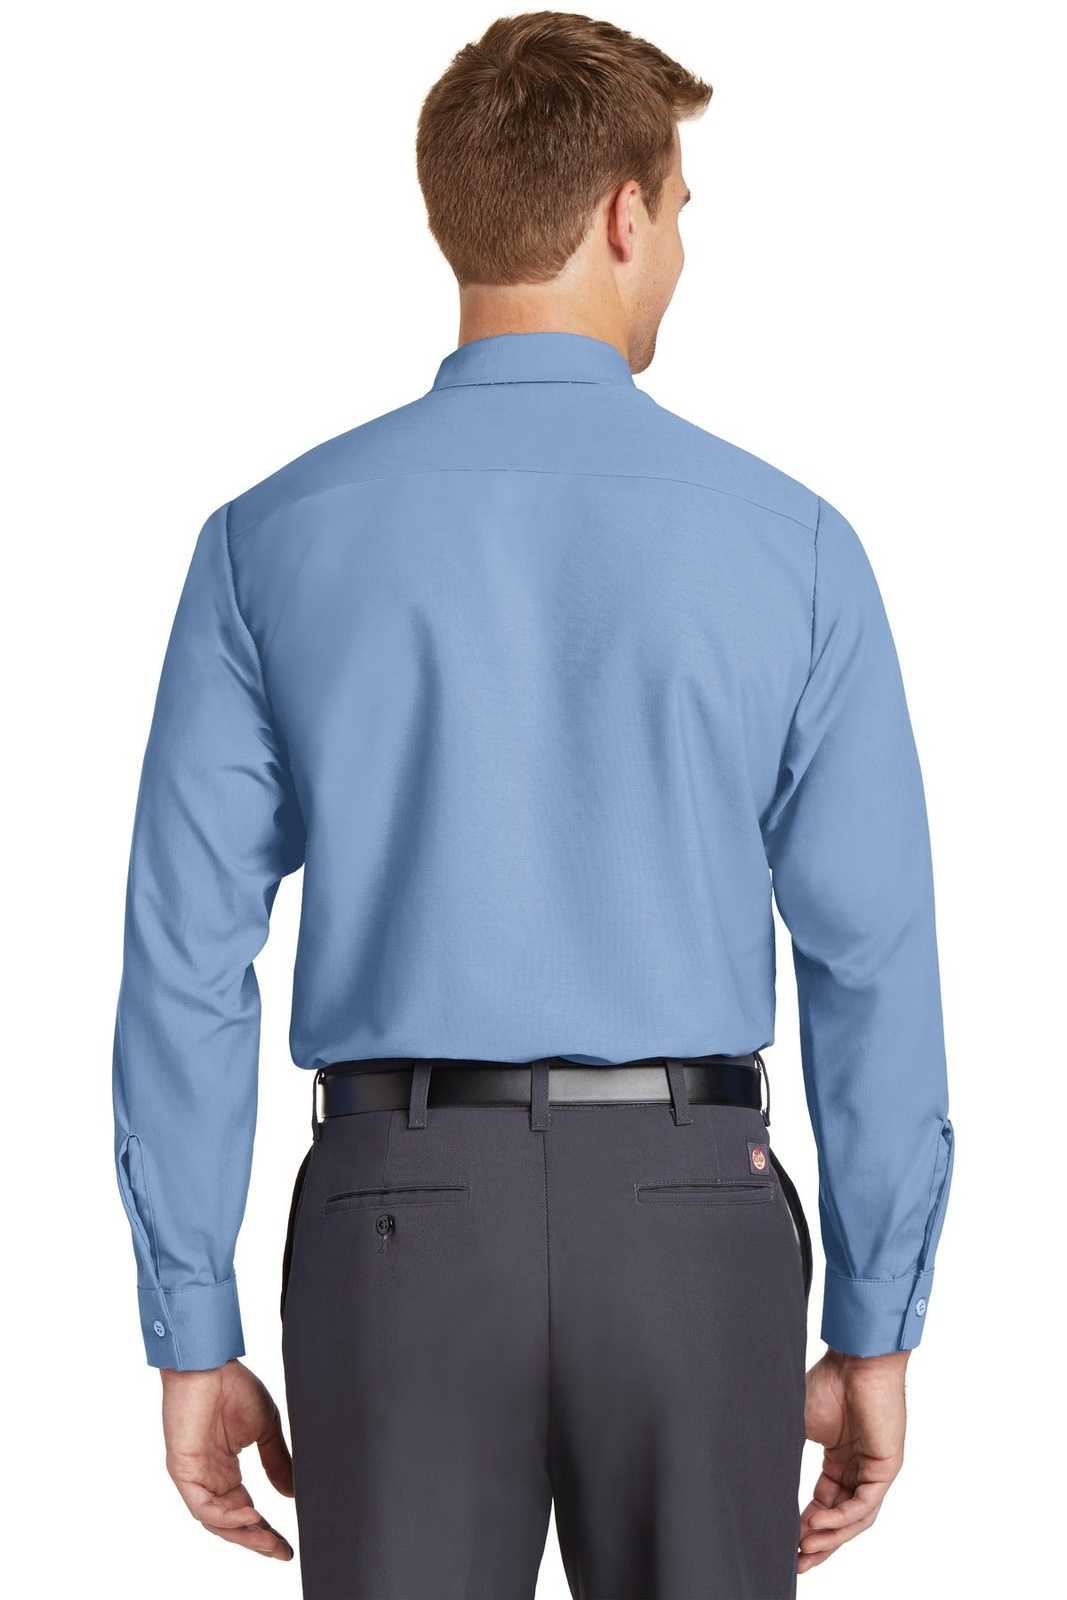 Red Kap SP14 Long Sleeve Industrial Work Shirt - Petrol Blue - HIT a Double - 1